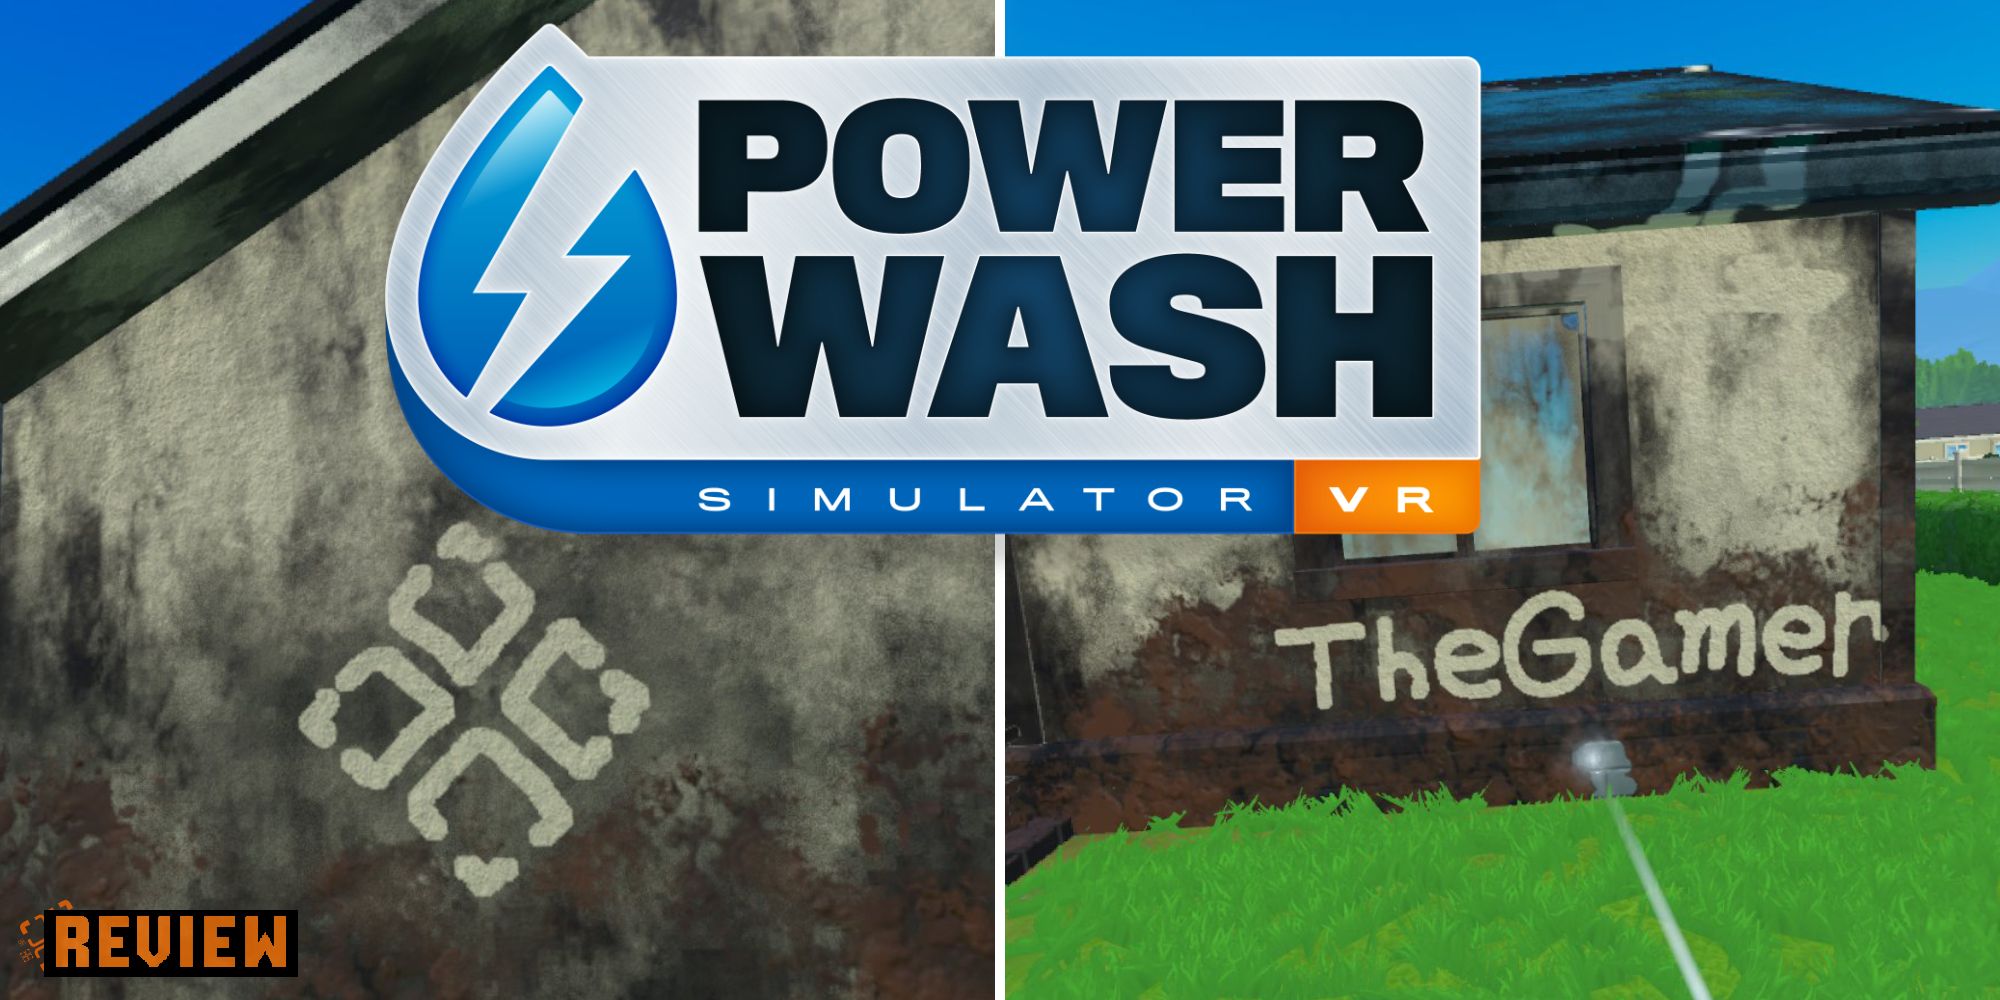 PowerWash Simulator VR makes a splash this November